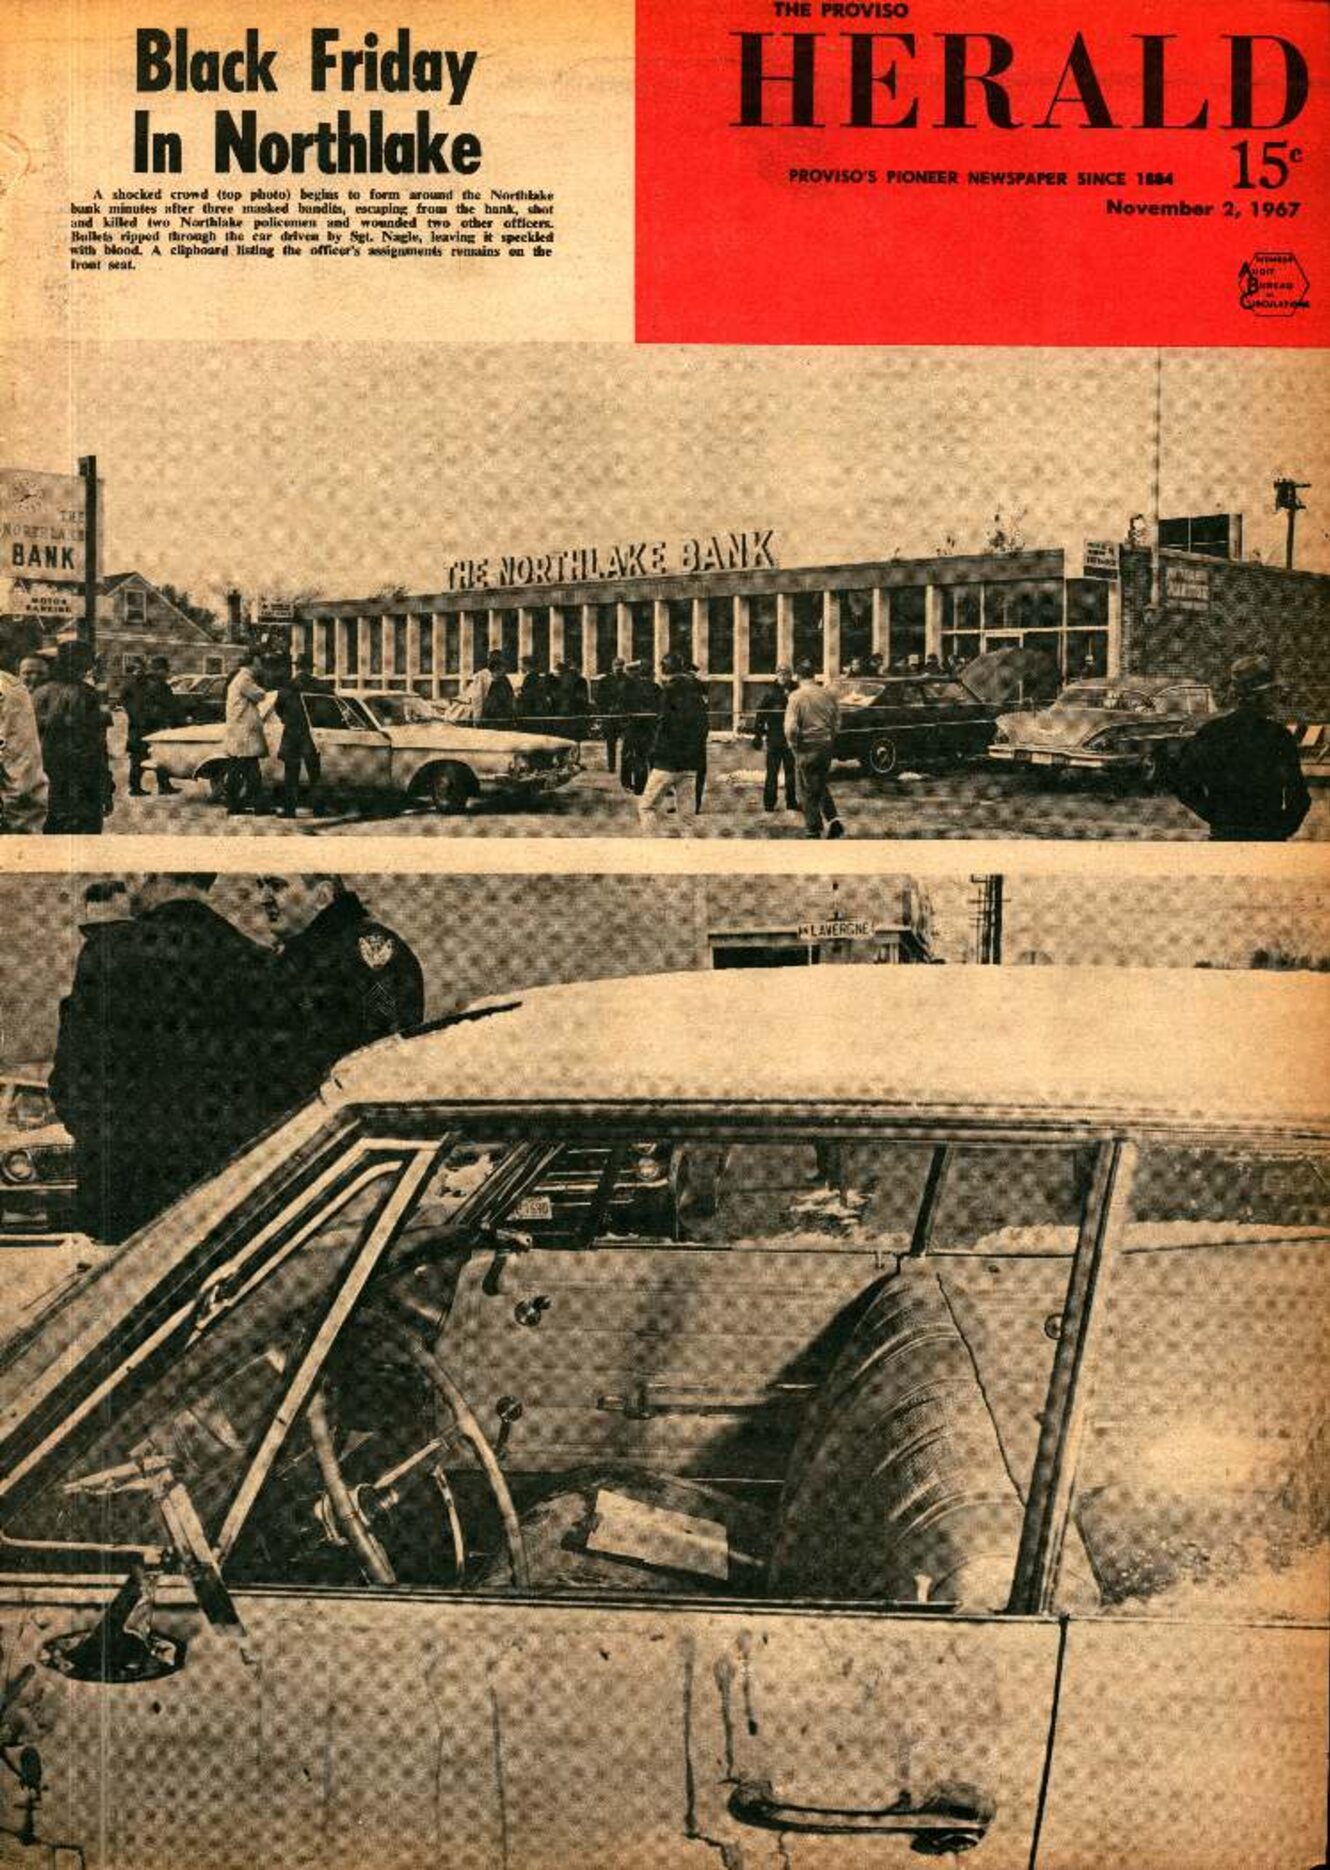 The Herald – 19671102